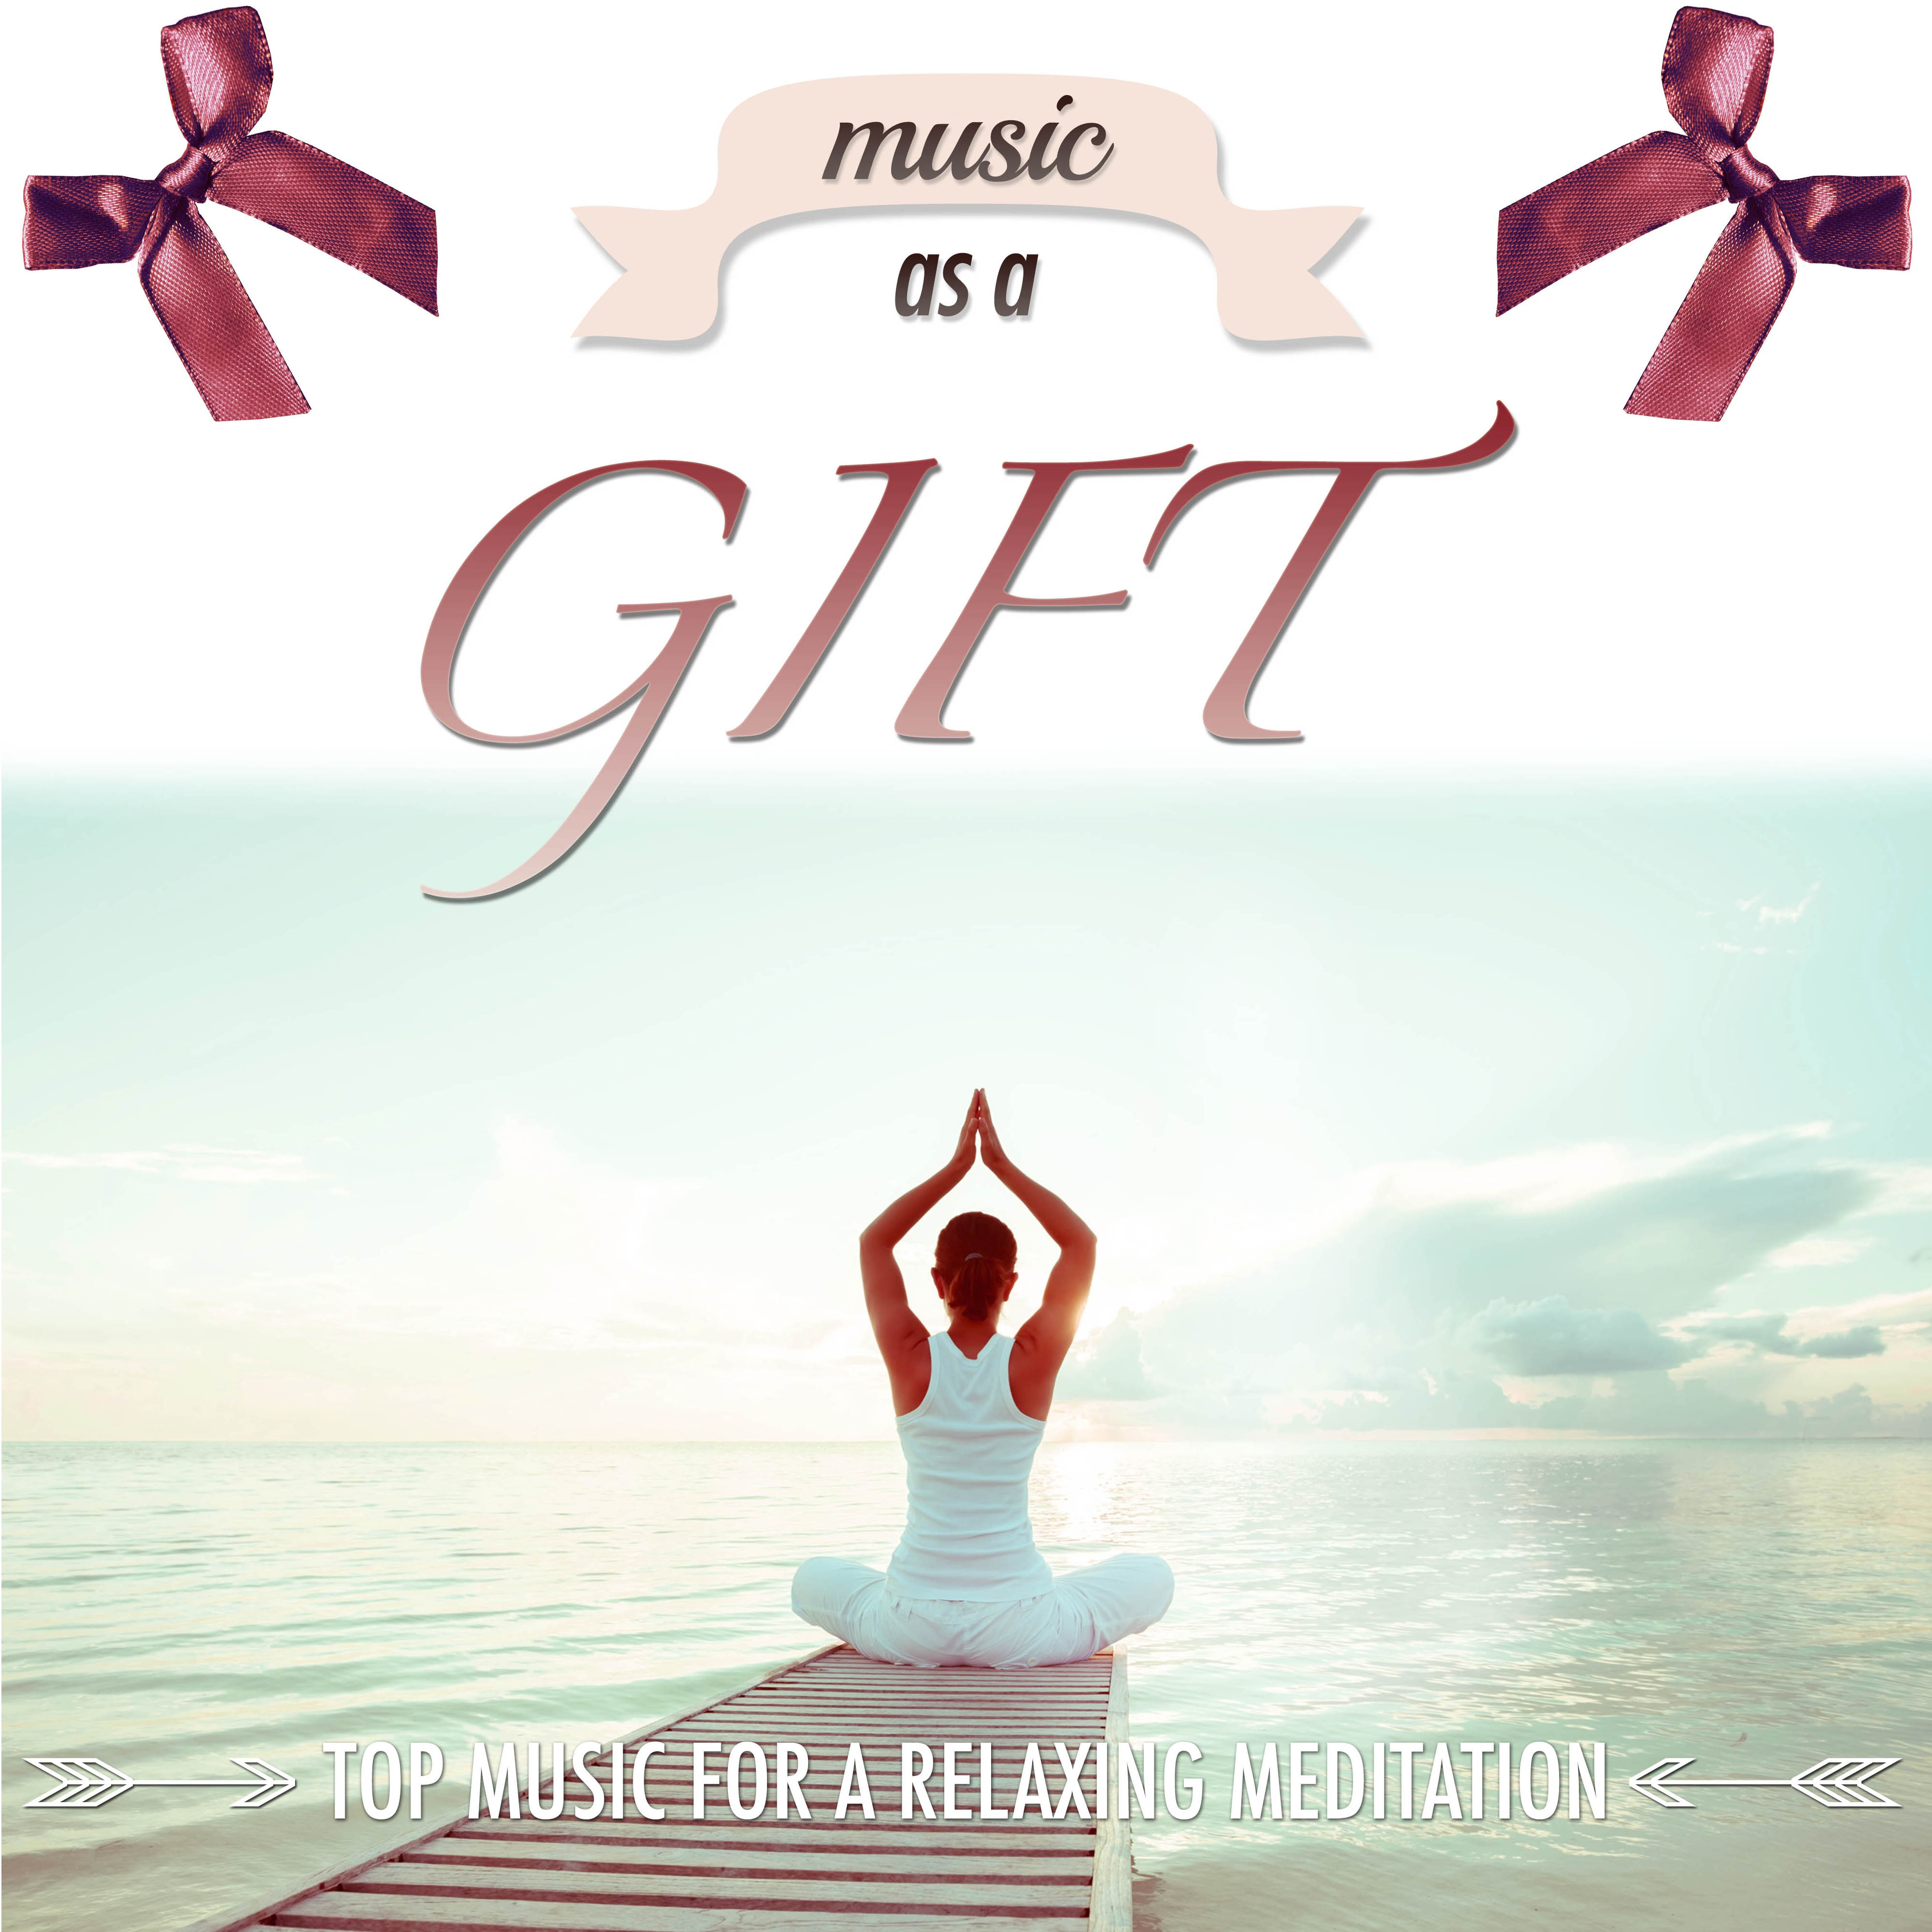 Mindful Meditation Music